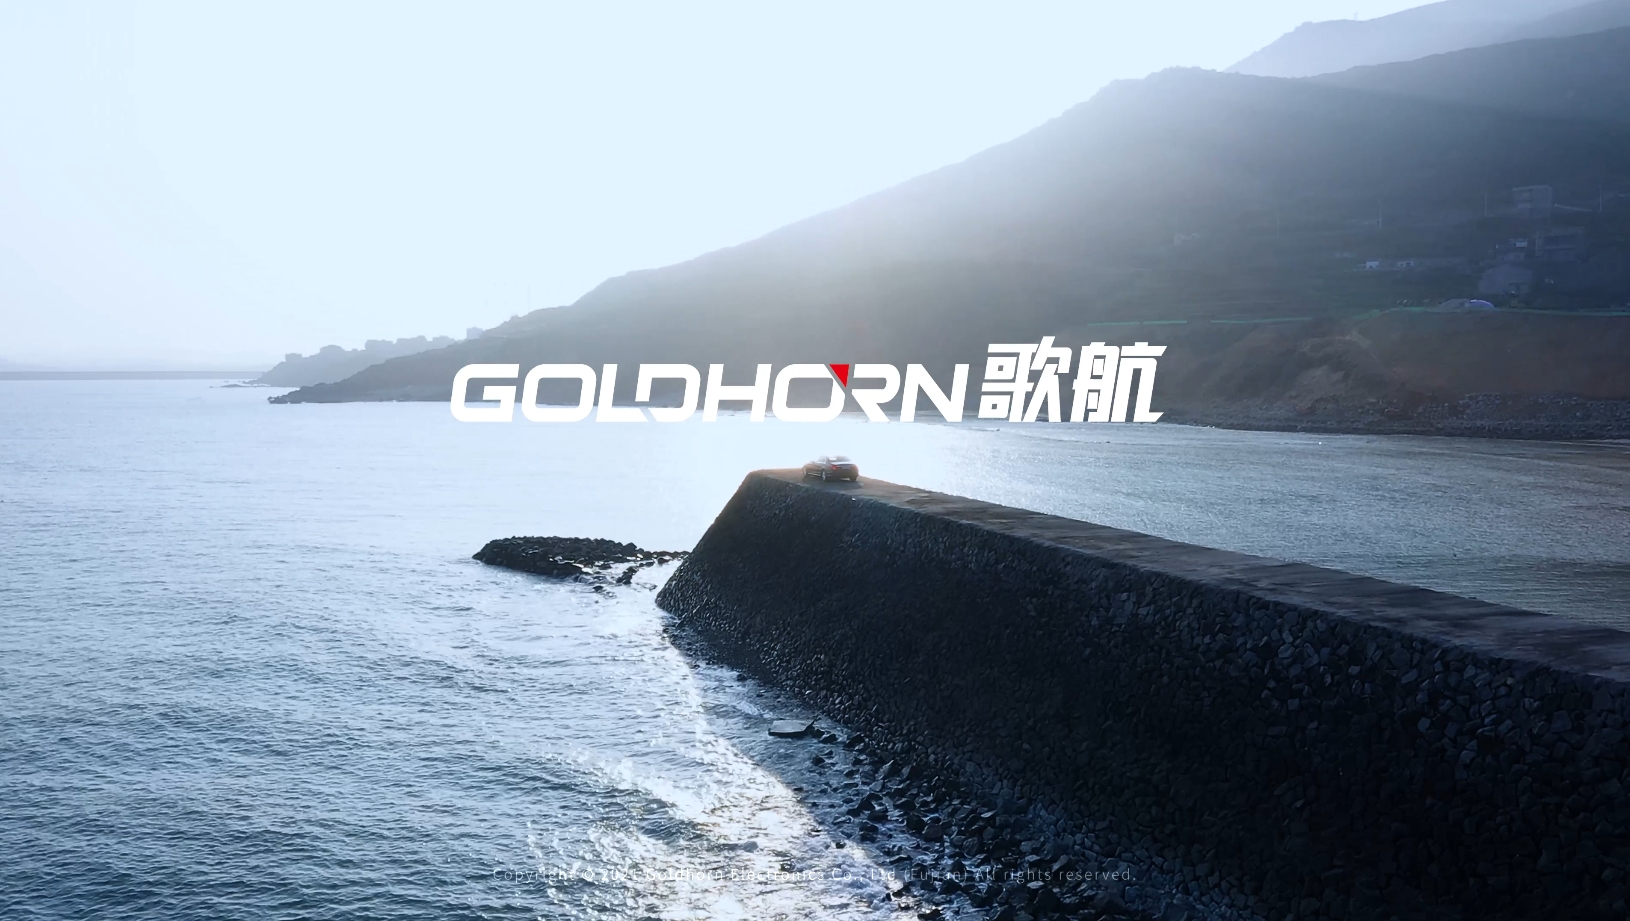 Goldhorn Promo Video